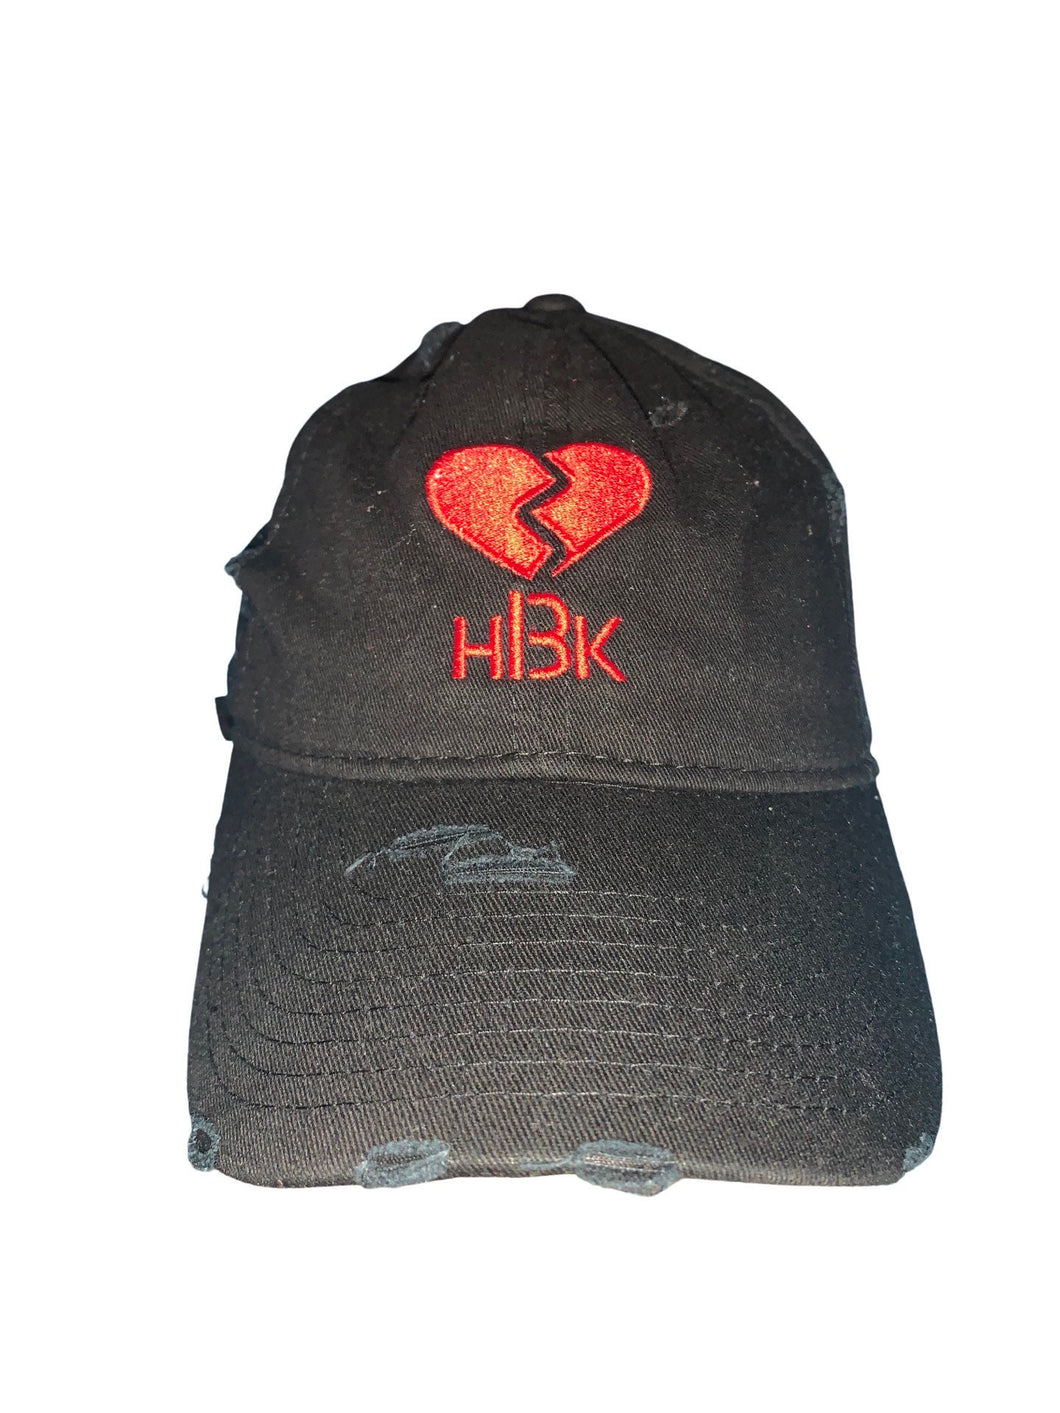 HBK hat (distressed)